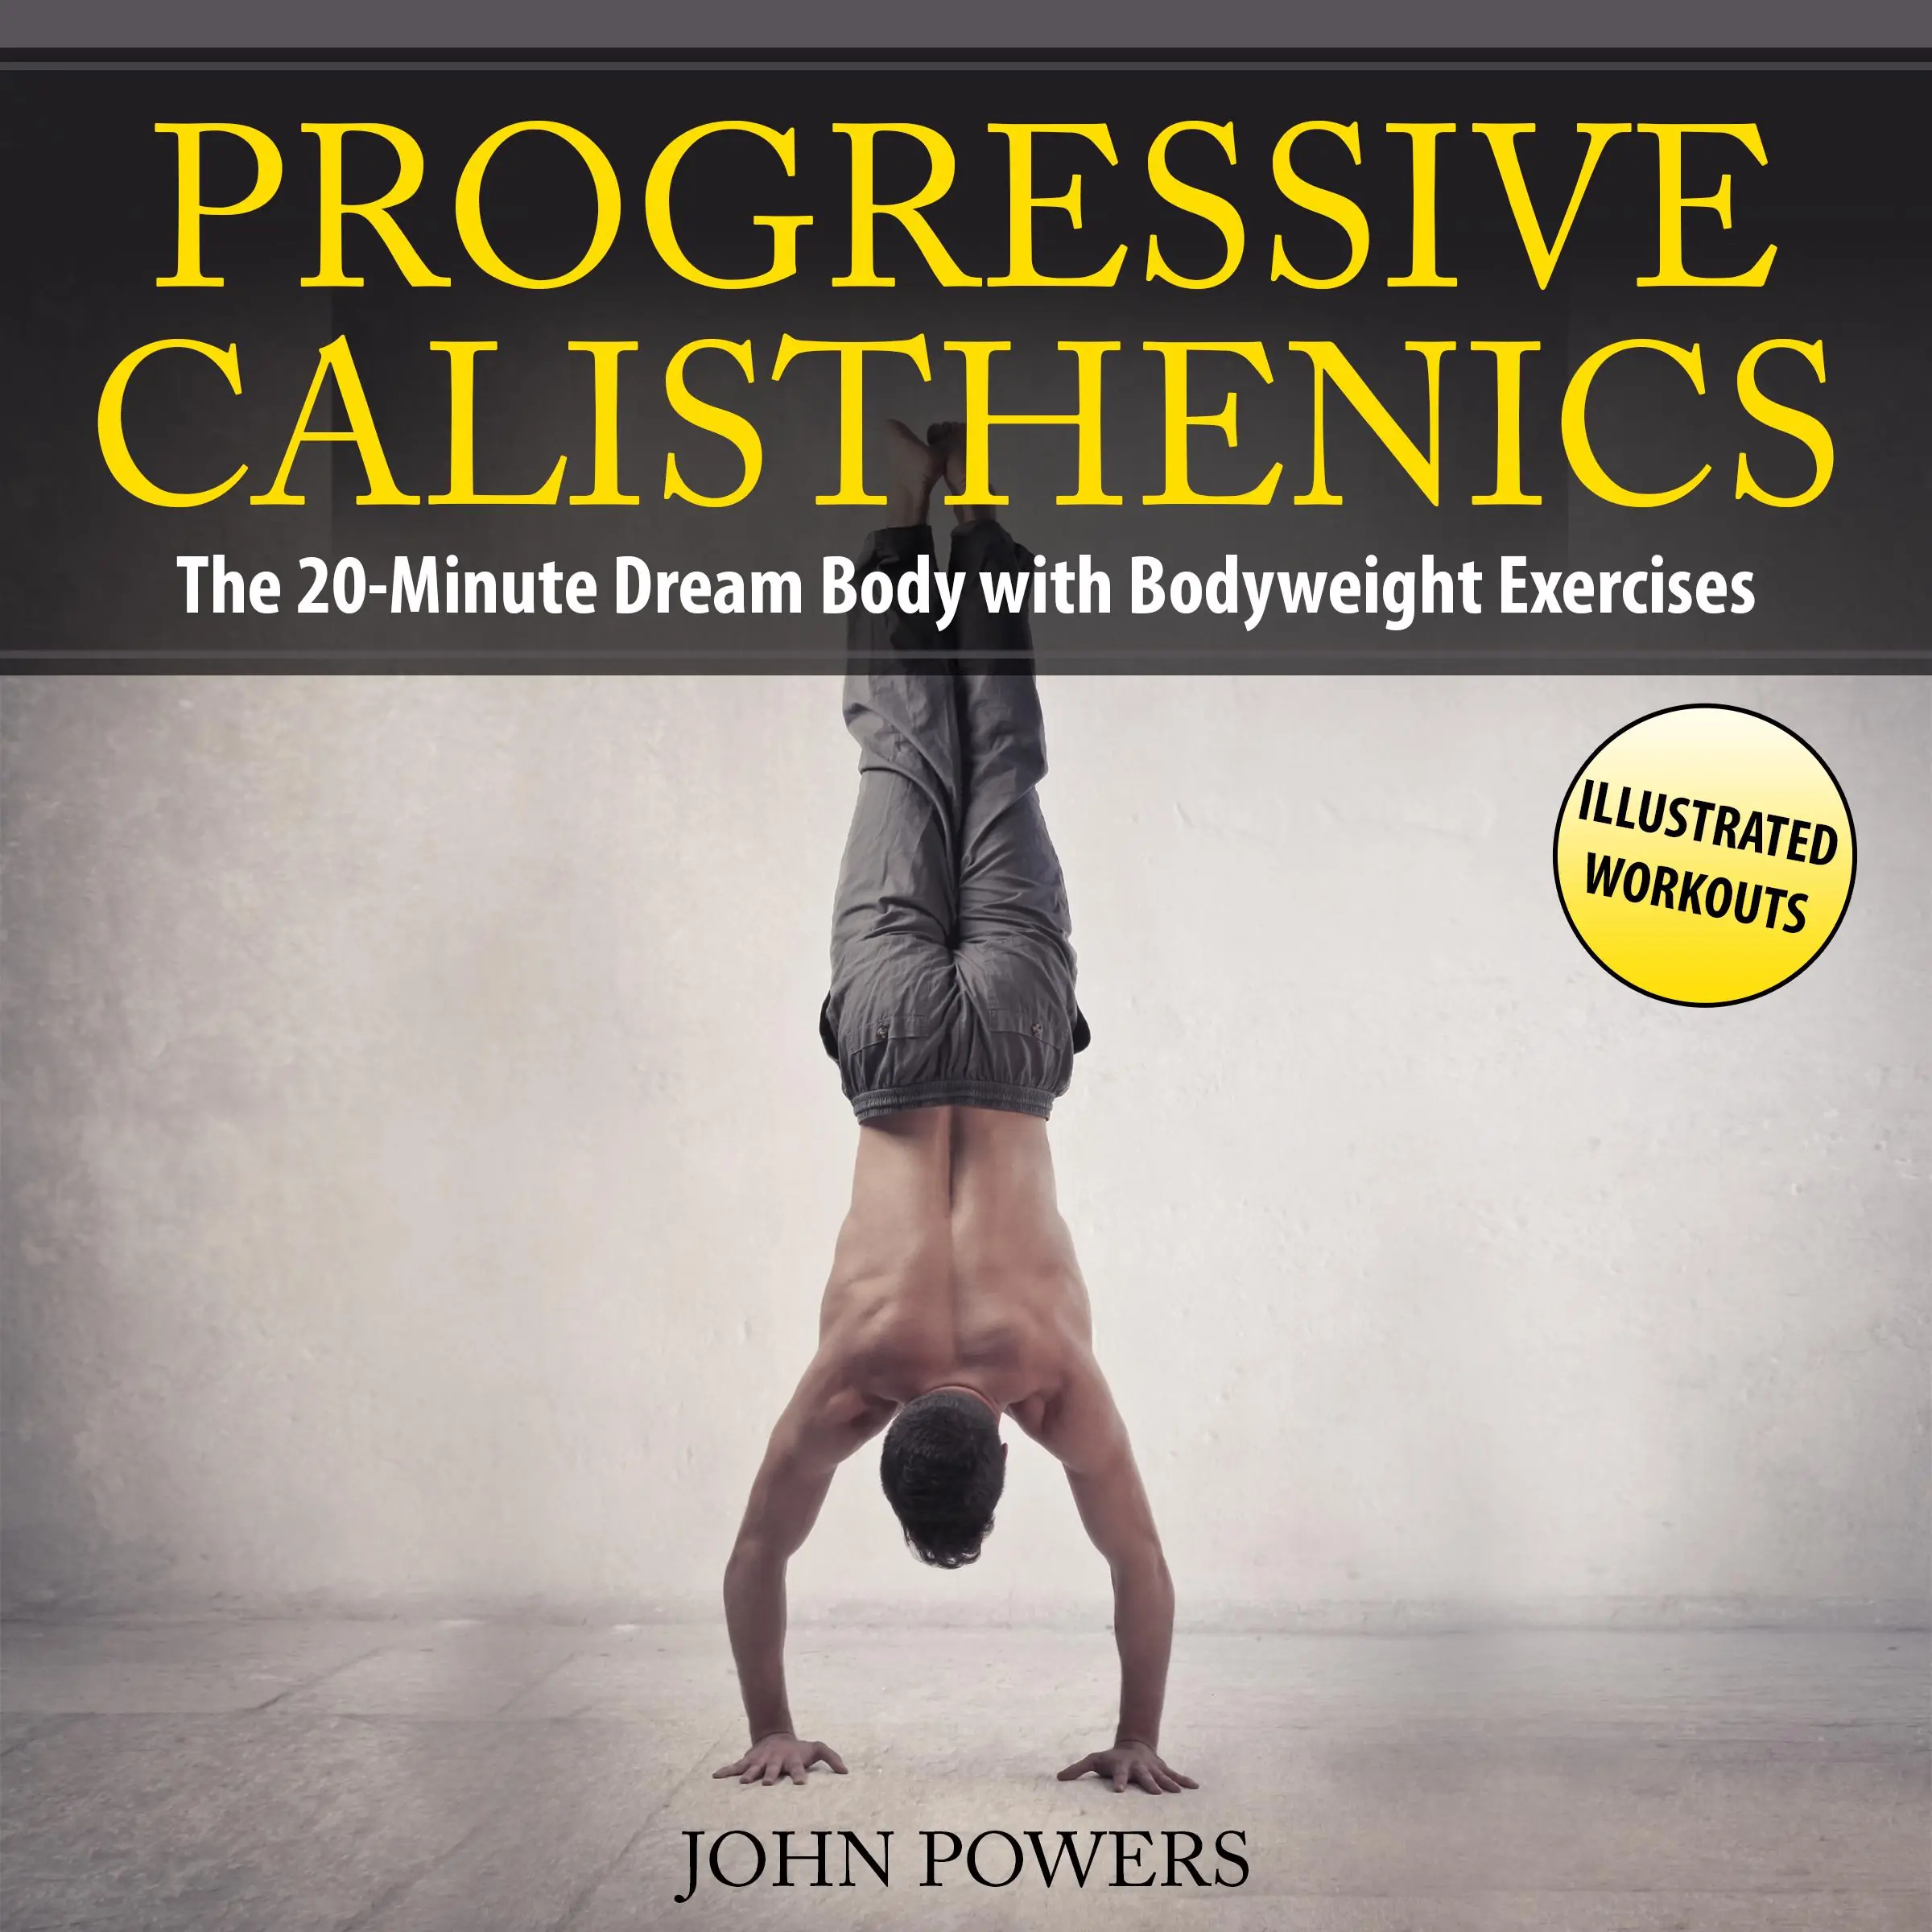 Progressive Calisthenics: The 20-Minute Dream Body with Bodyweight Exercises and Calisthenics Audiobook by John Powers